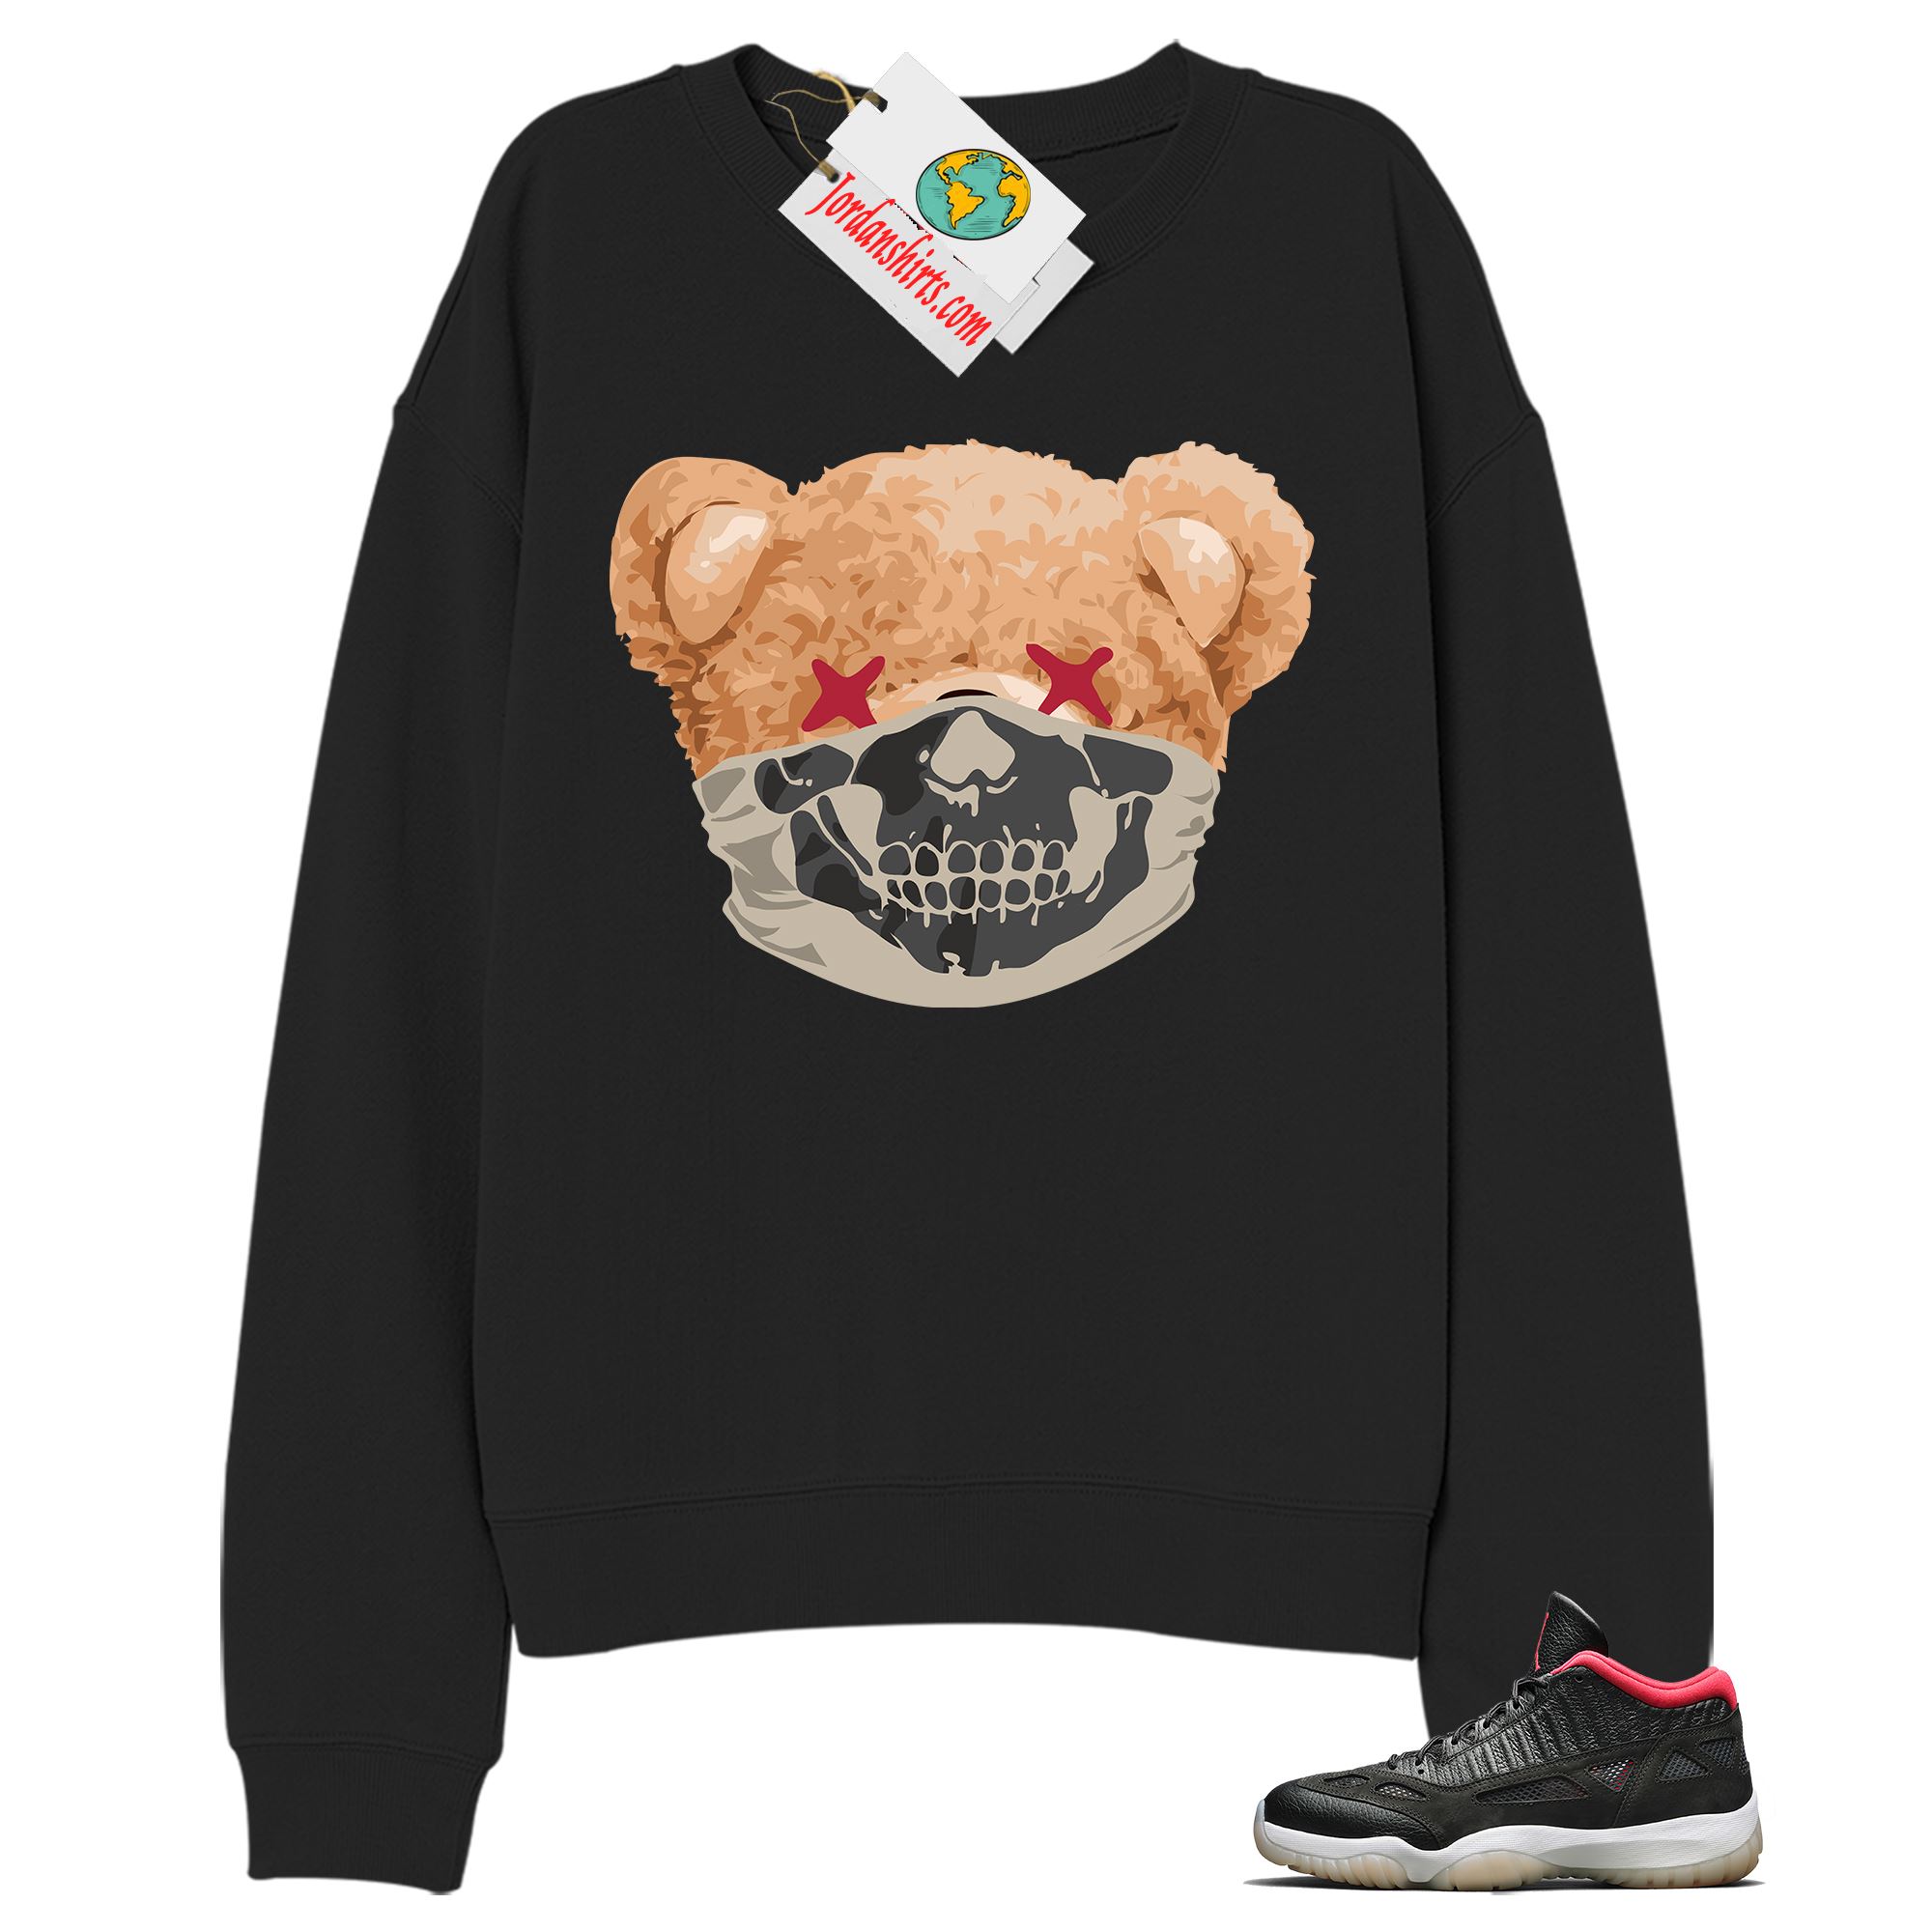 Jordan 11 Sweatshirt, Teddy Bear Skull Bandana Black Sweatshirt Air Jordan 11 Bred 11s Full Size Up To 5xl